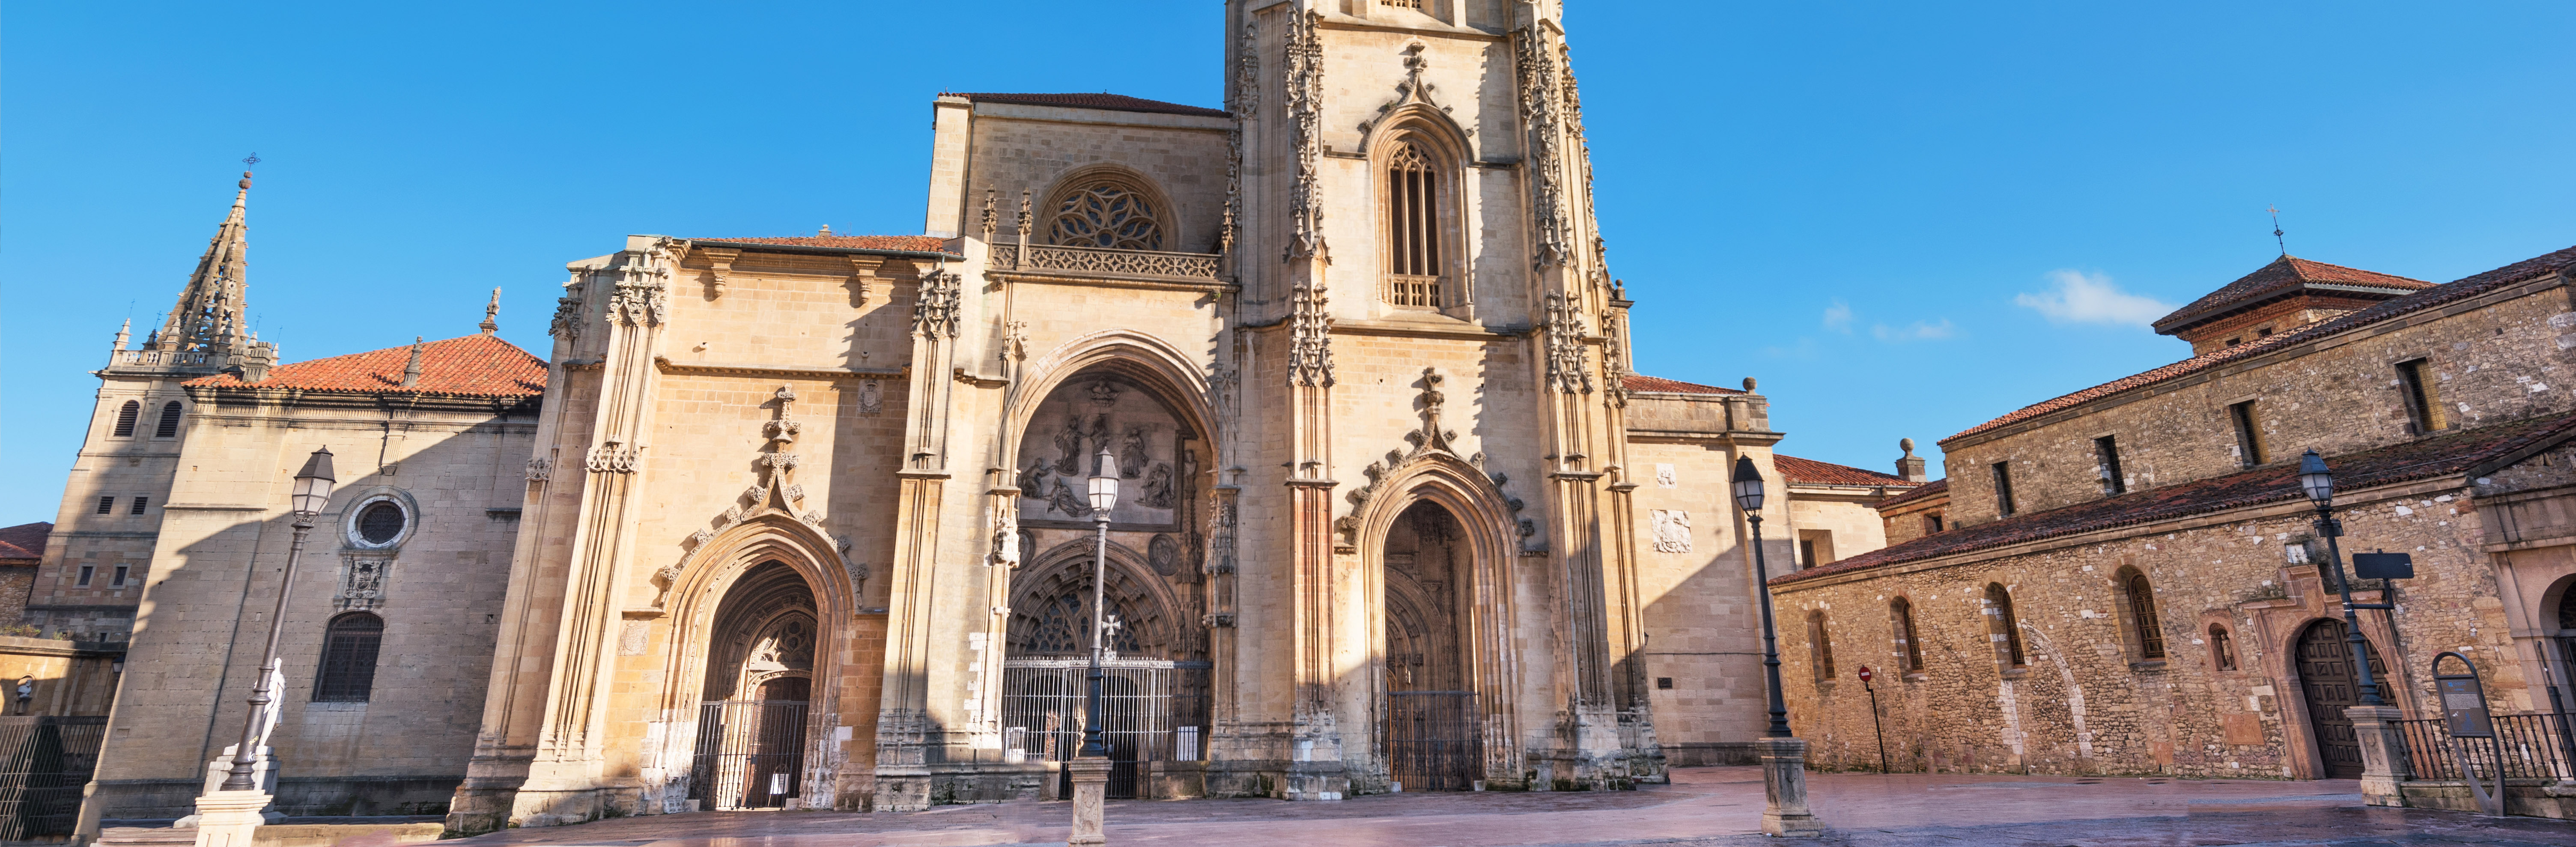 Catedral de Oviedo - Publicidad Oviedo